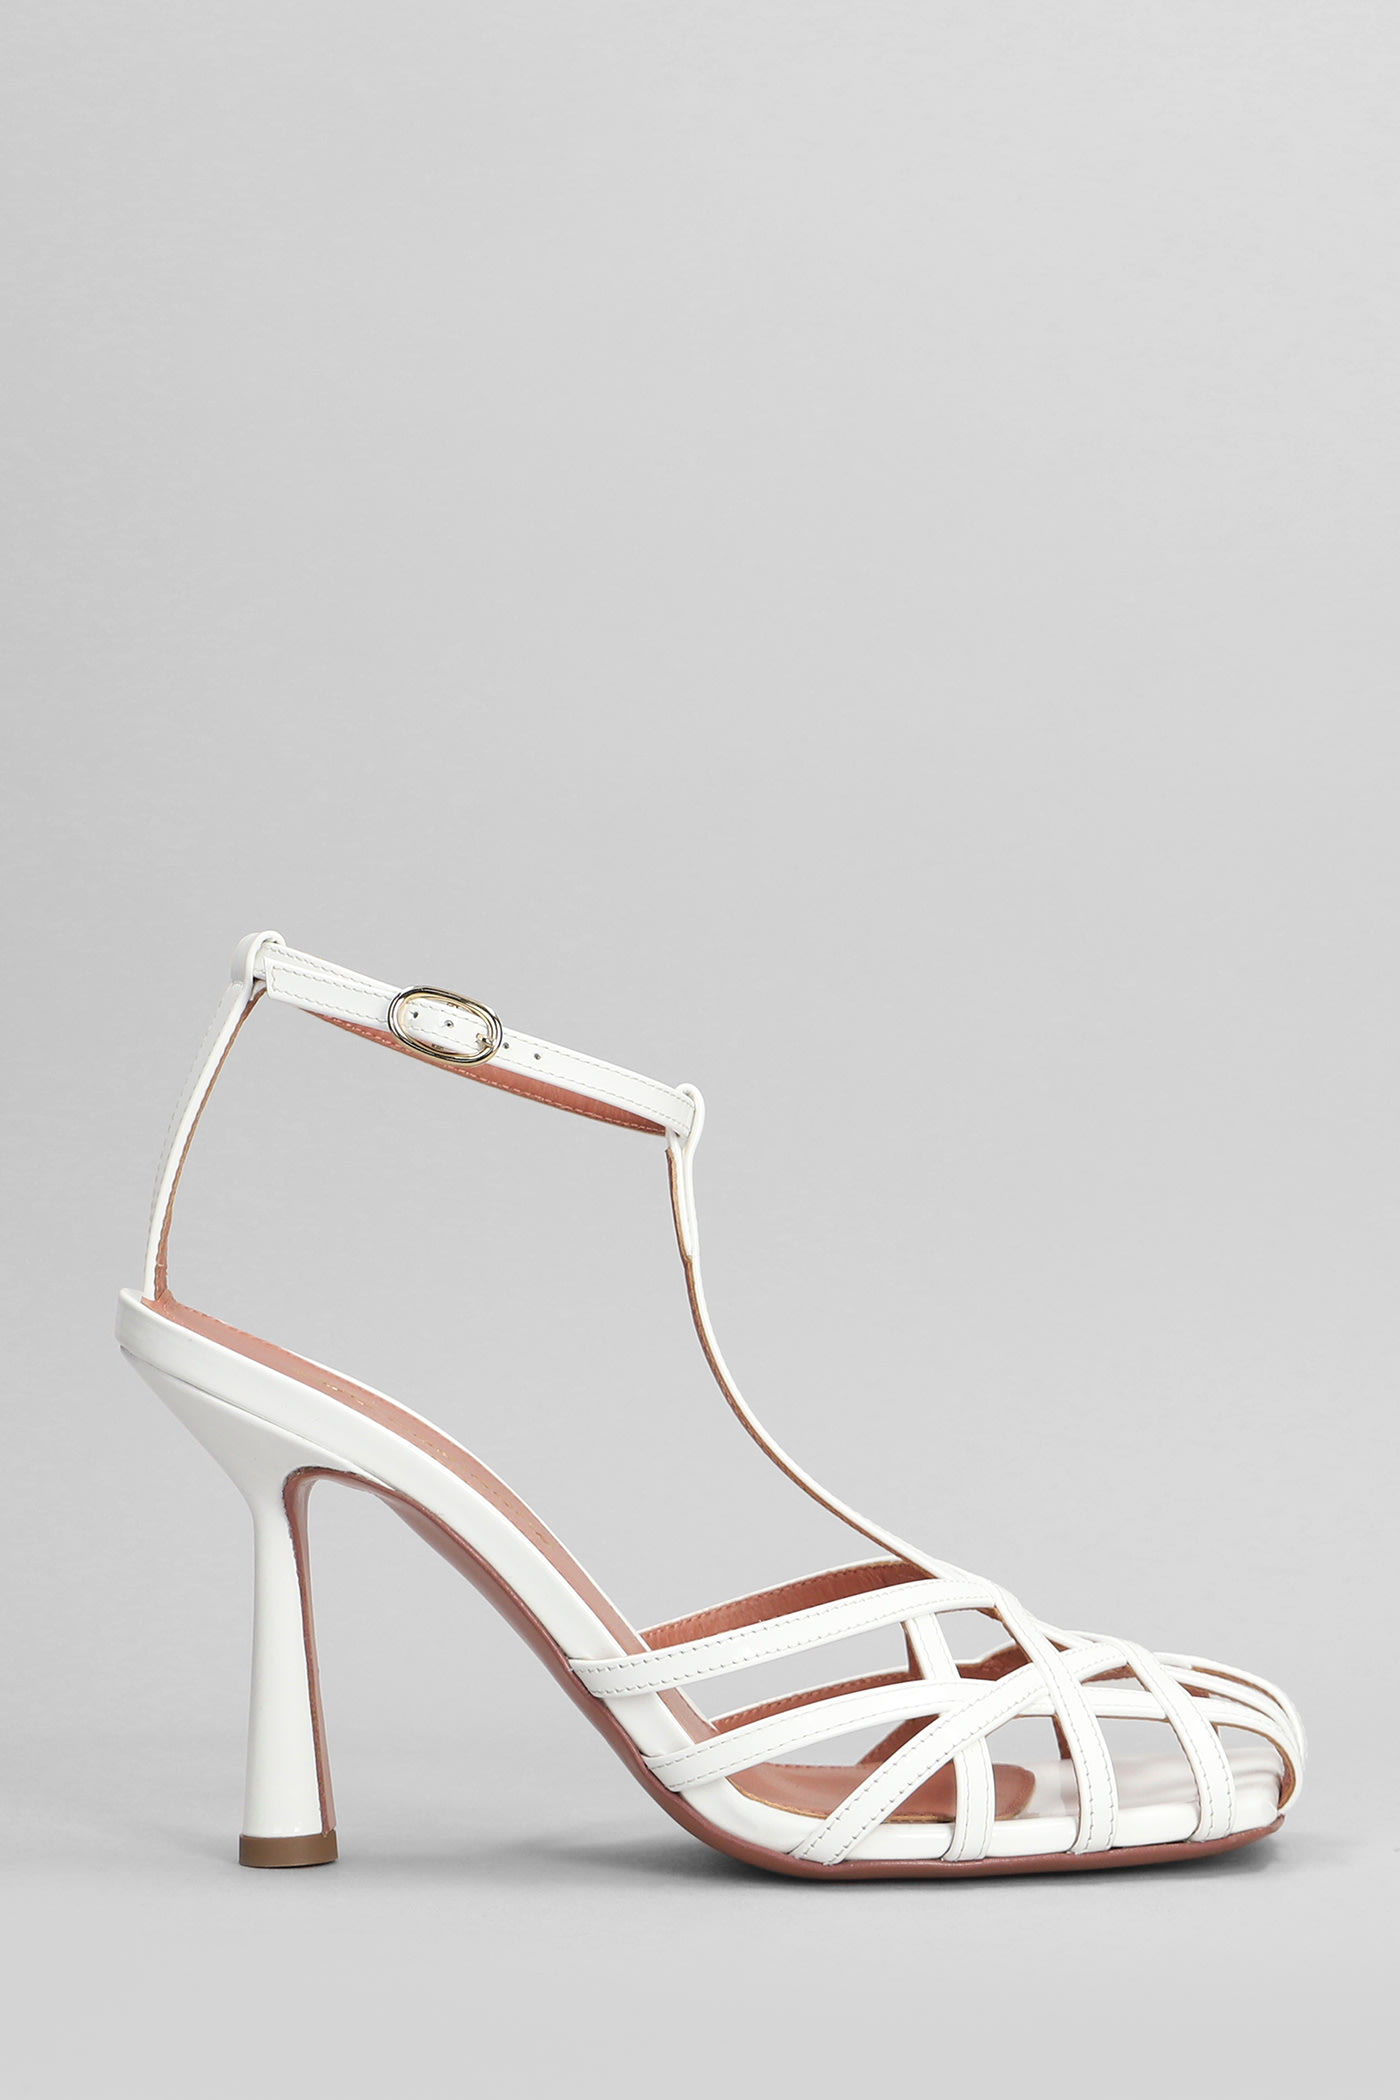 Aldo Castagna Lidia Sandals In White Patent Leather